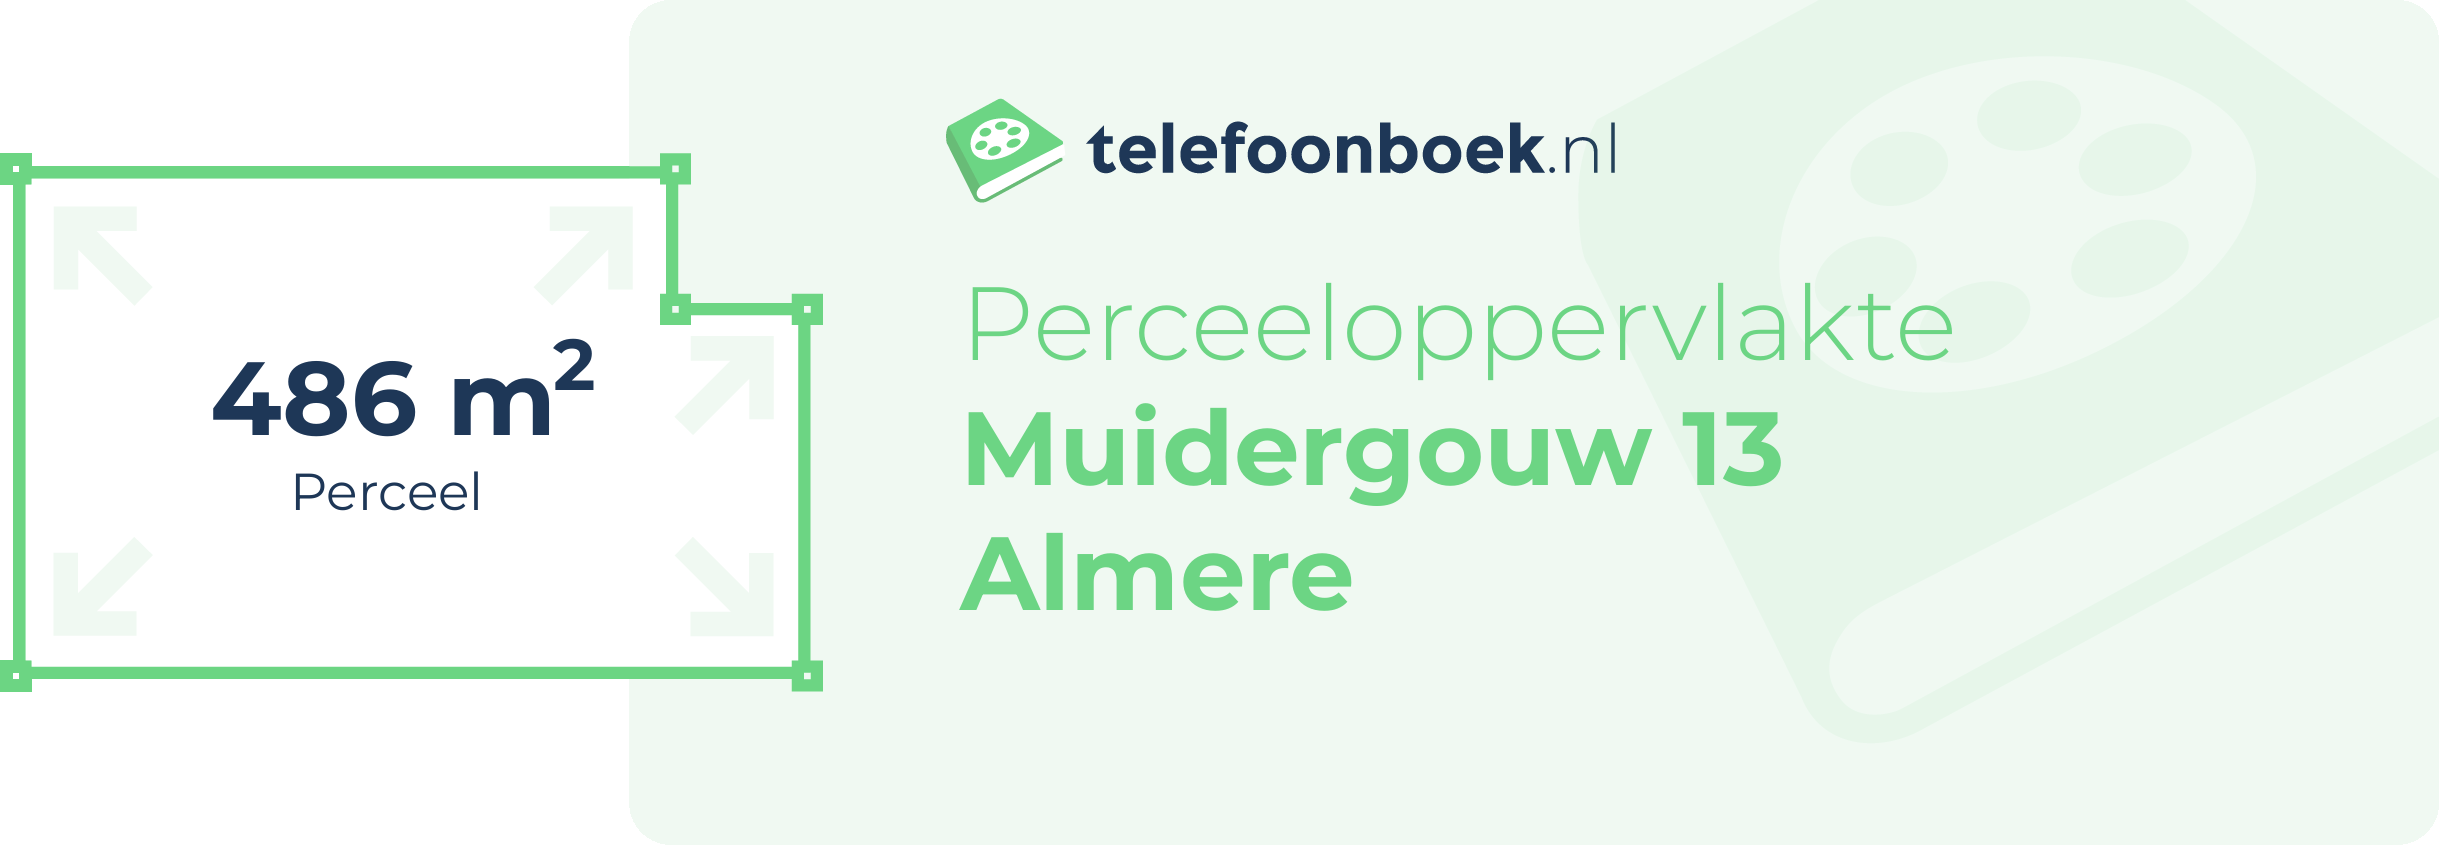 Perceeloppervlakte Muidergouw 13 Almere